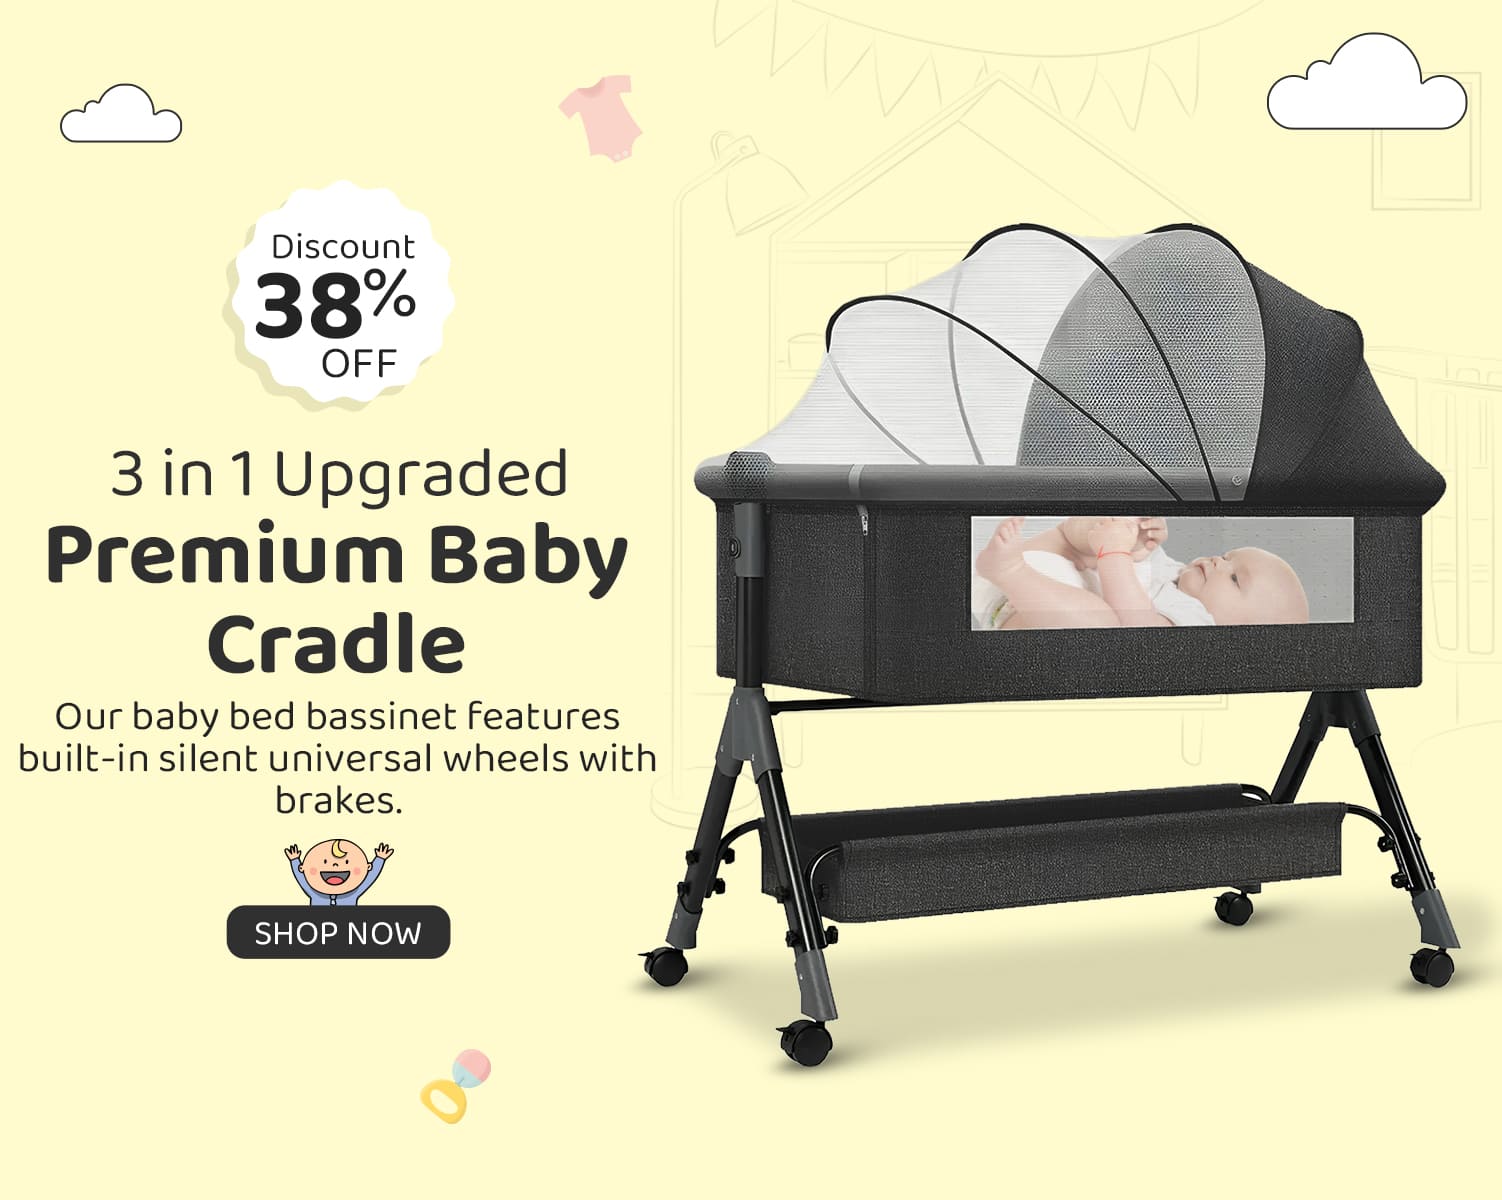 3in 1 Upgraded Premium Baby Cradle